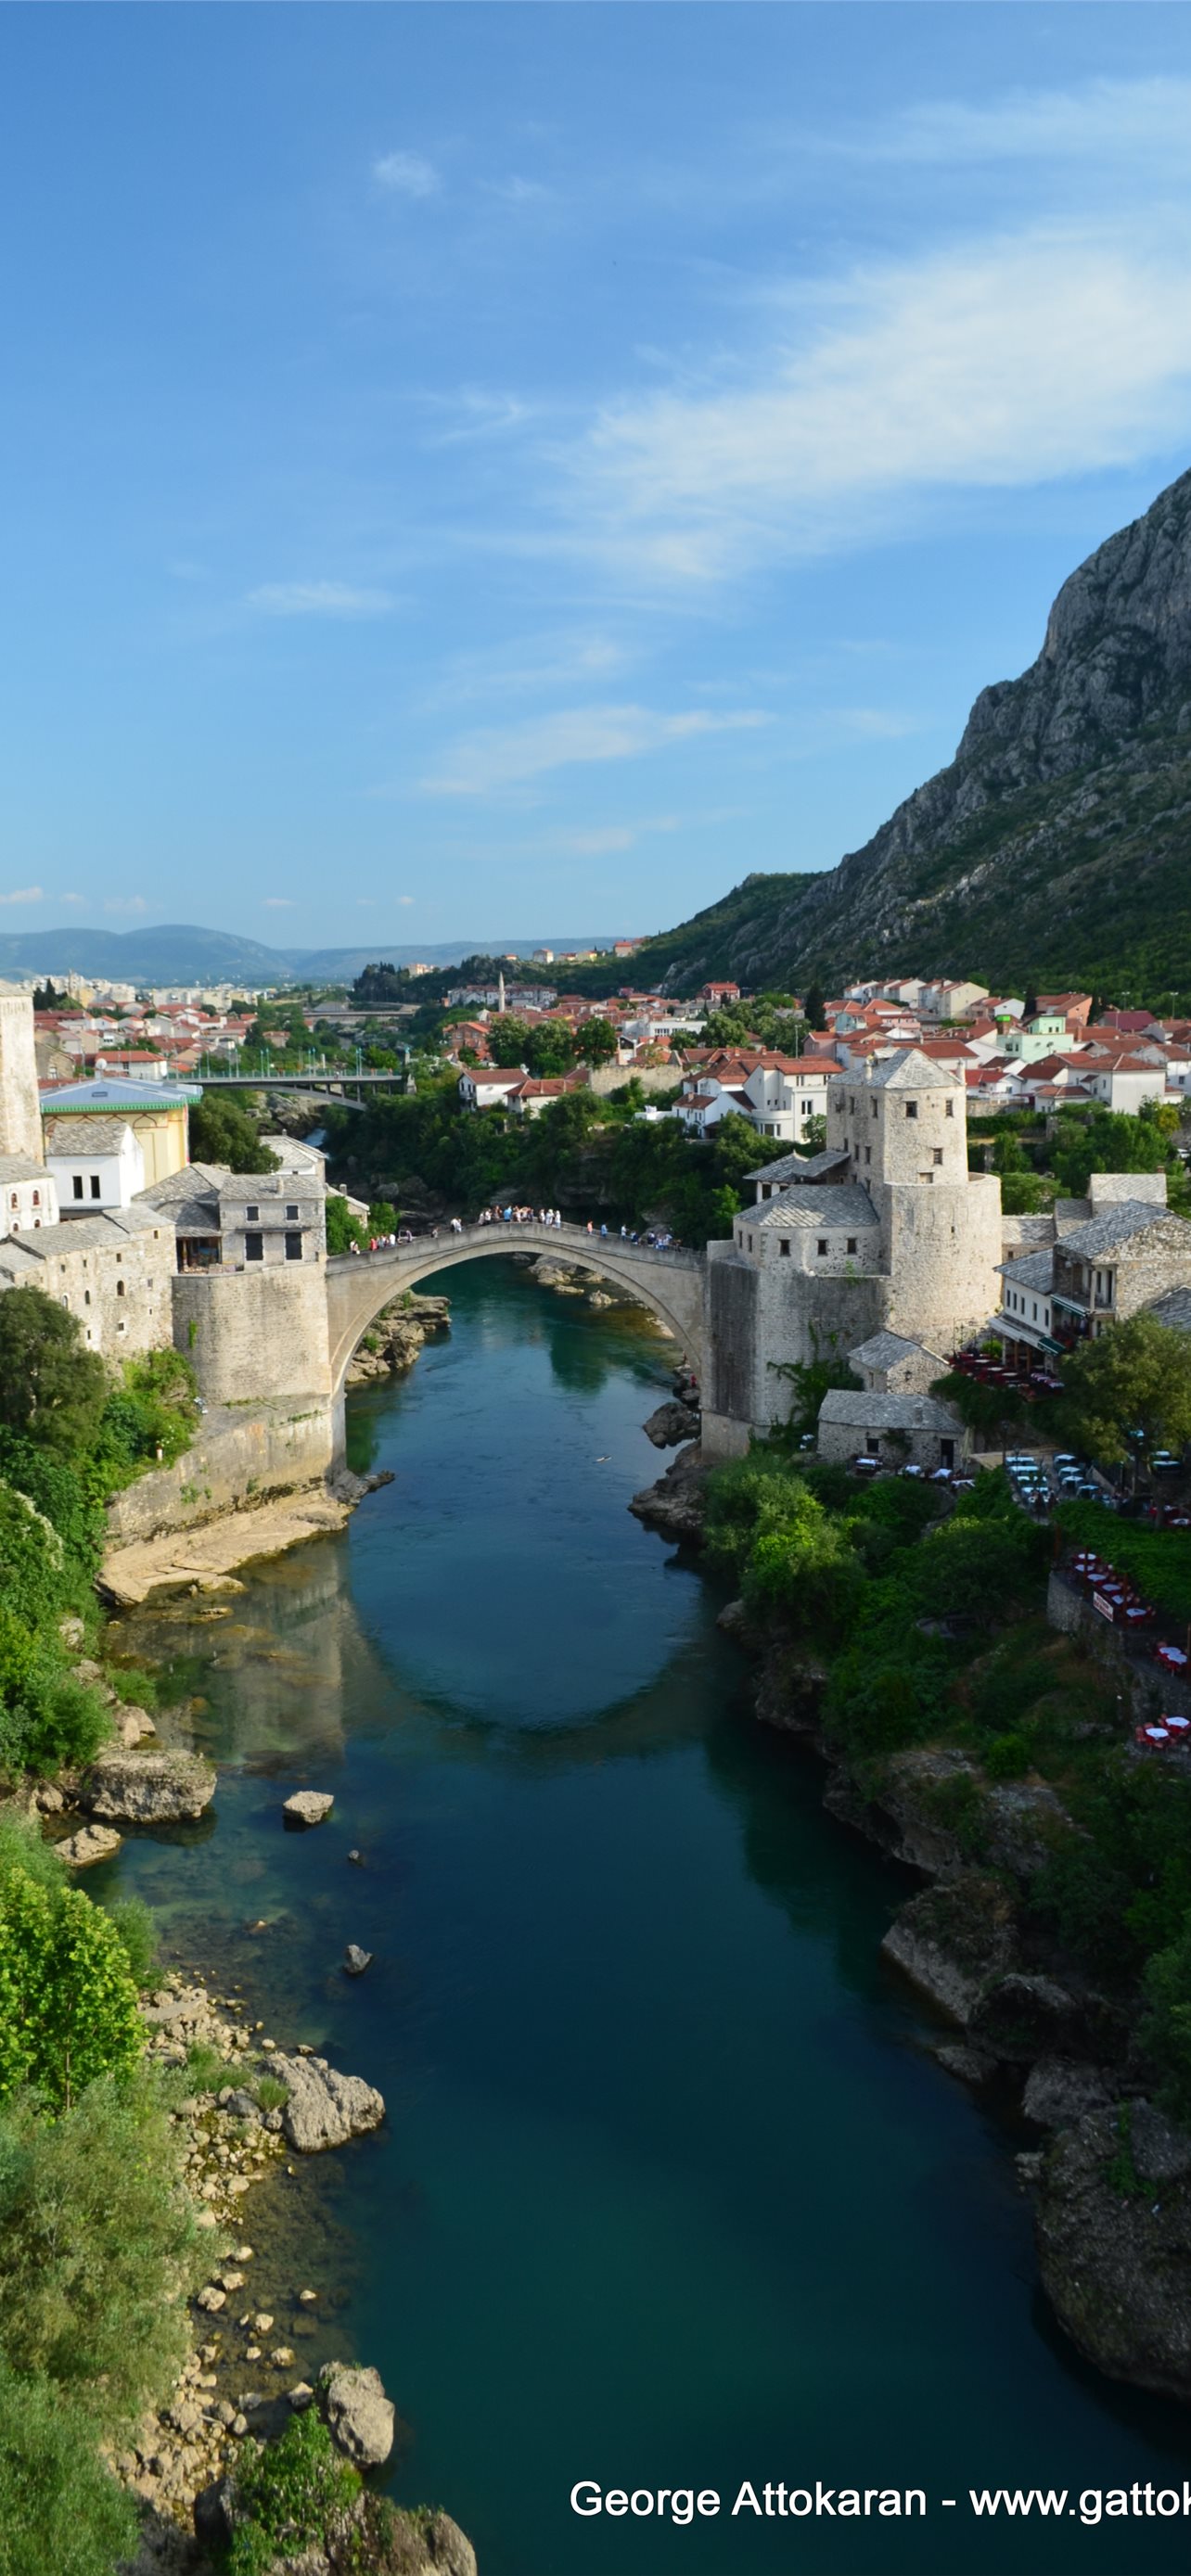 640x1136 Mostar Bosnia Herzegovina Iphone 5 wallpaper